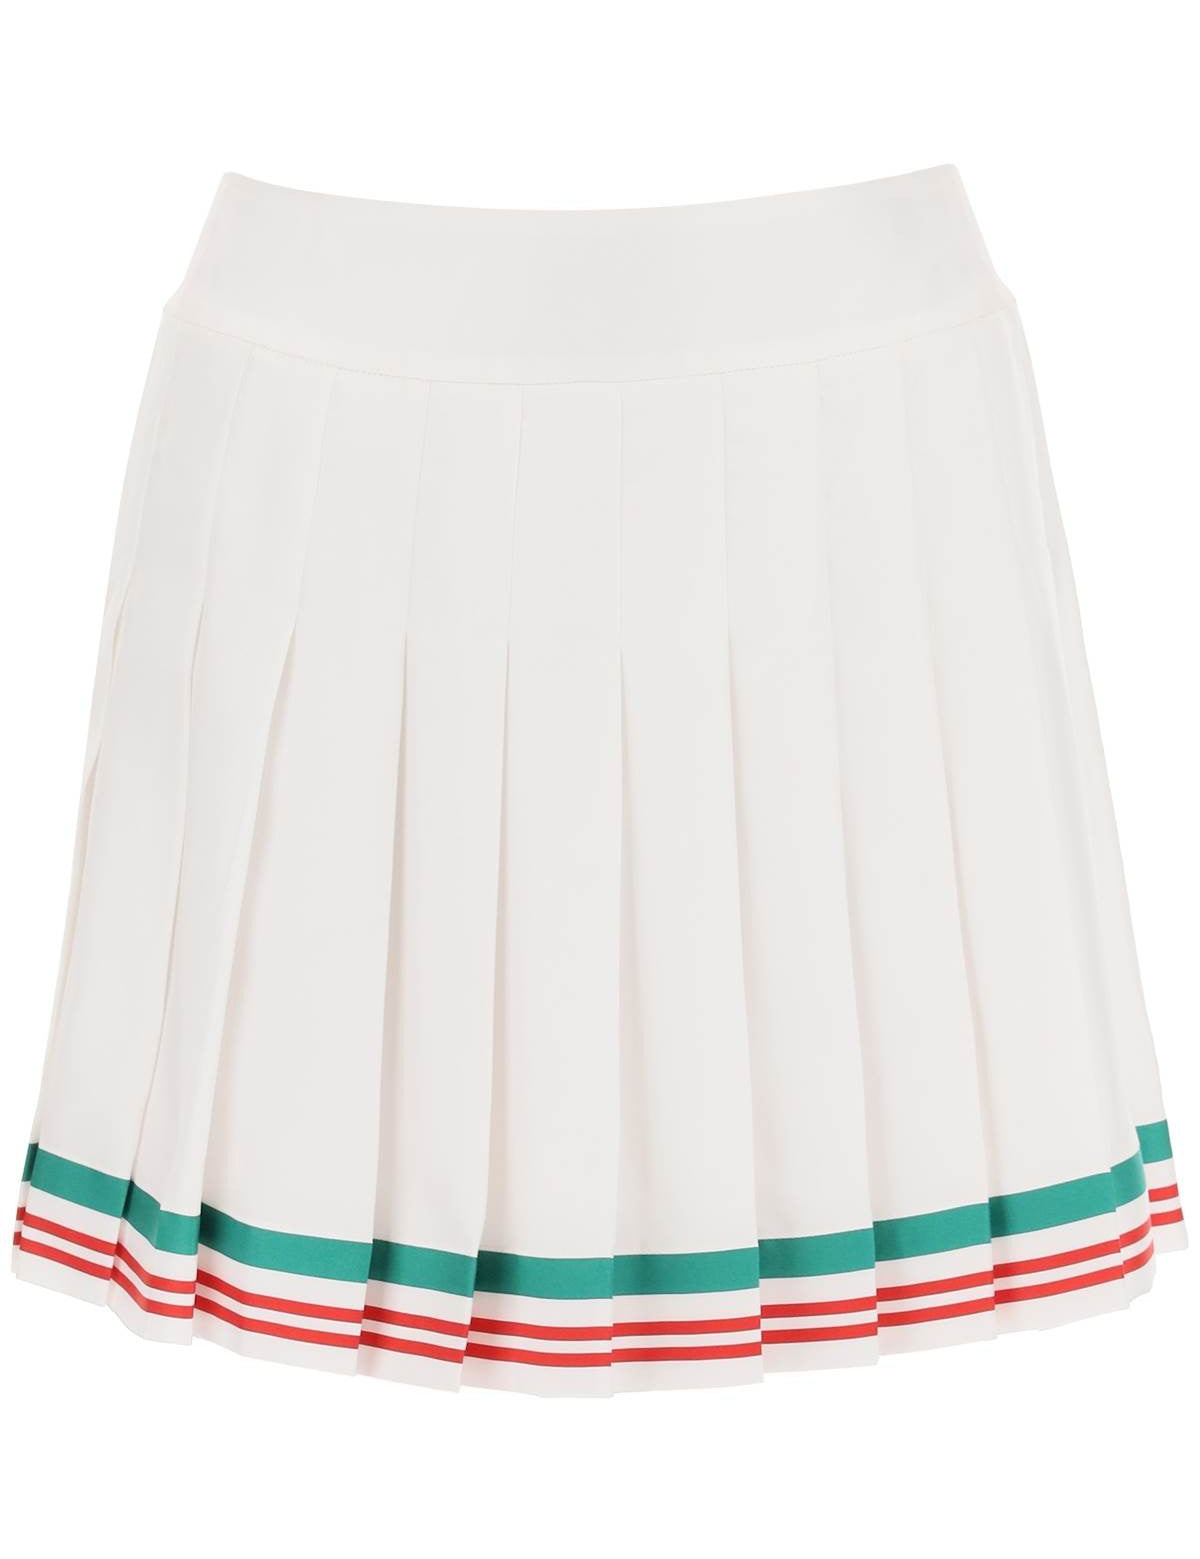 casablanca-casaway-tennis-mini-skirt.jpg